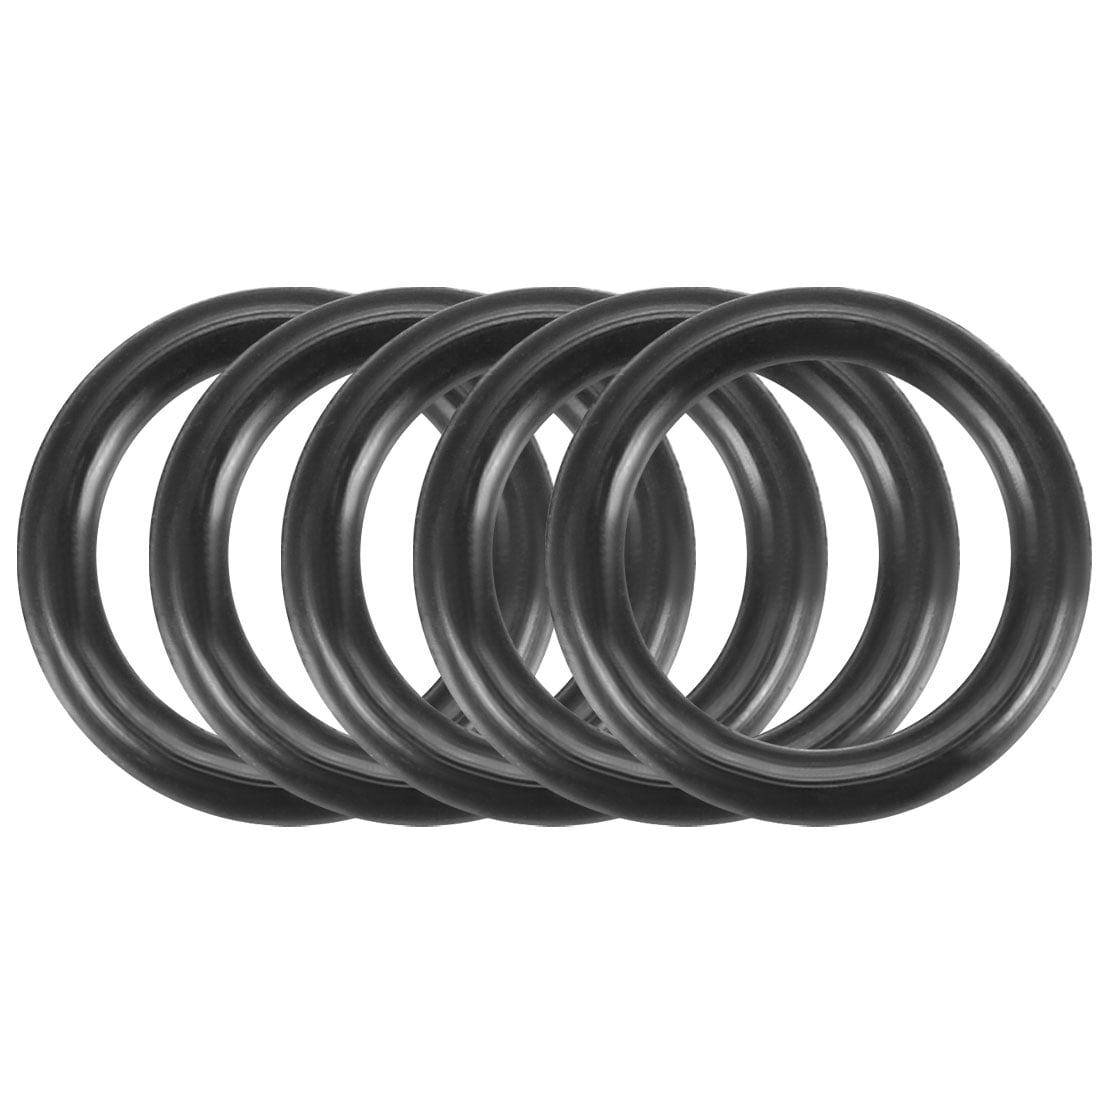 100pcs 4mm x 1.5mm Black NBR Nitrile Rubber O Ring Seal Grommets 